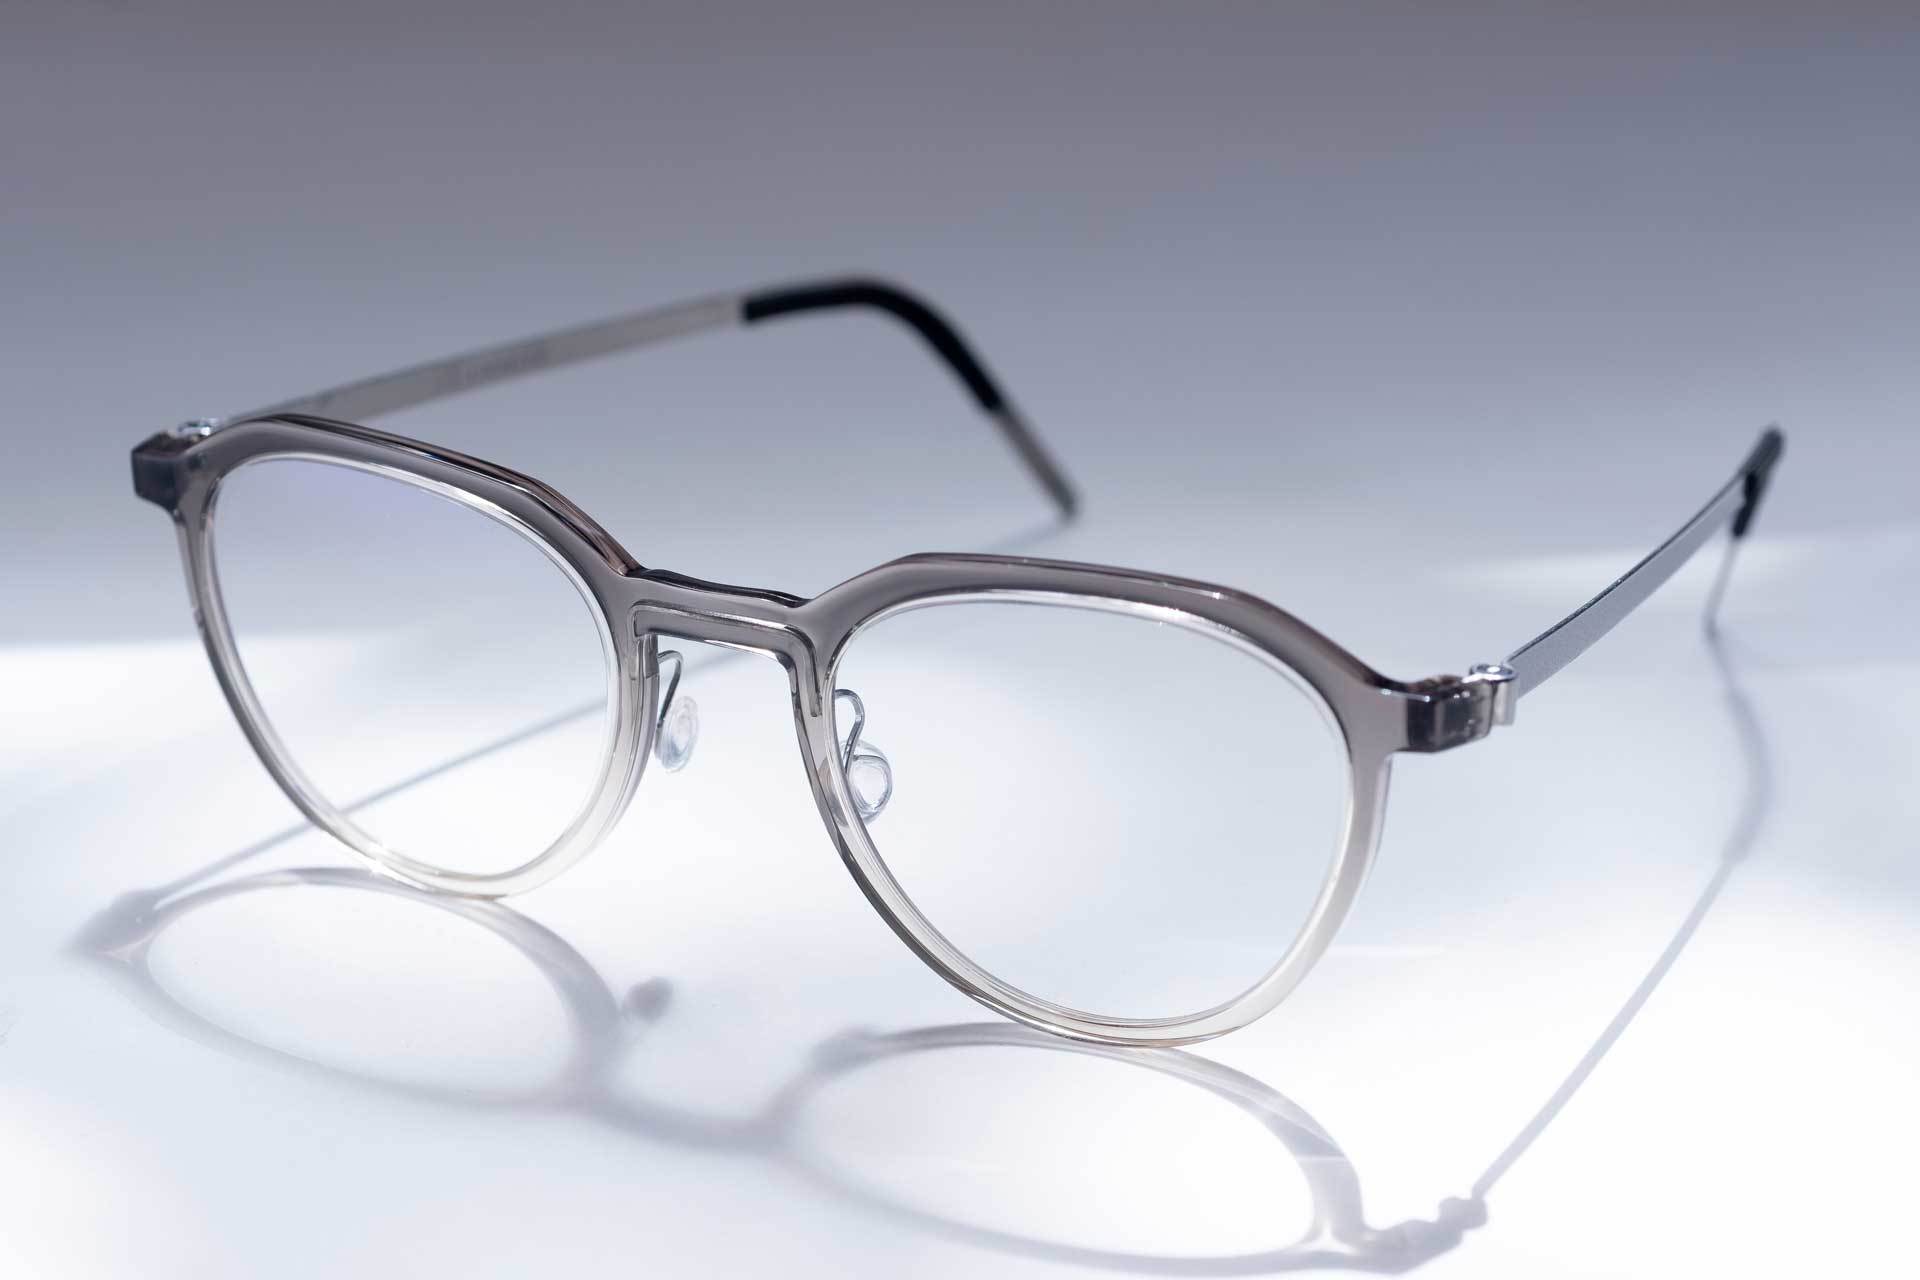 LINDBERG Glasses Header Image